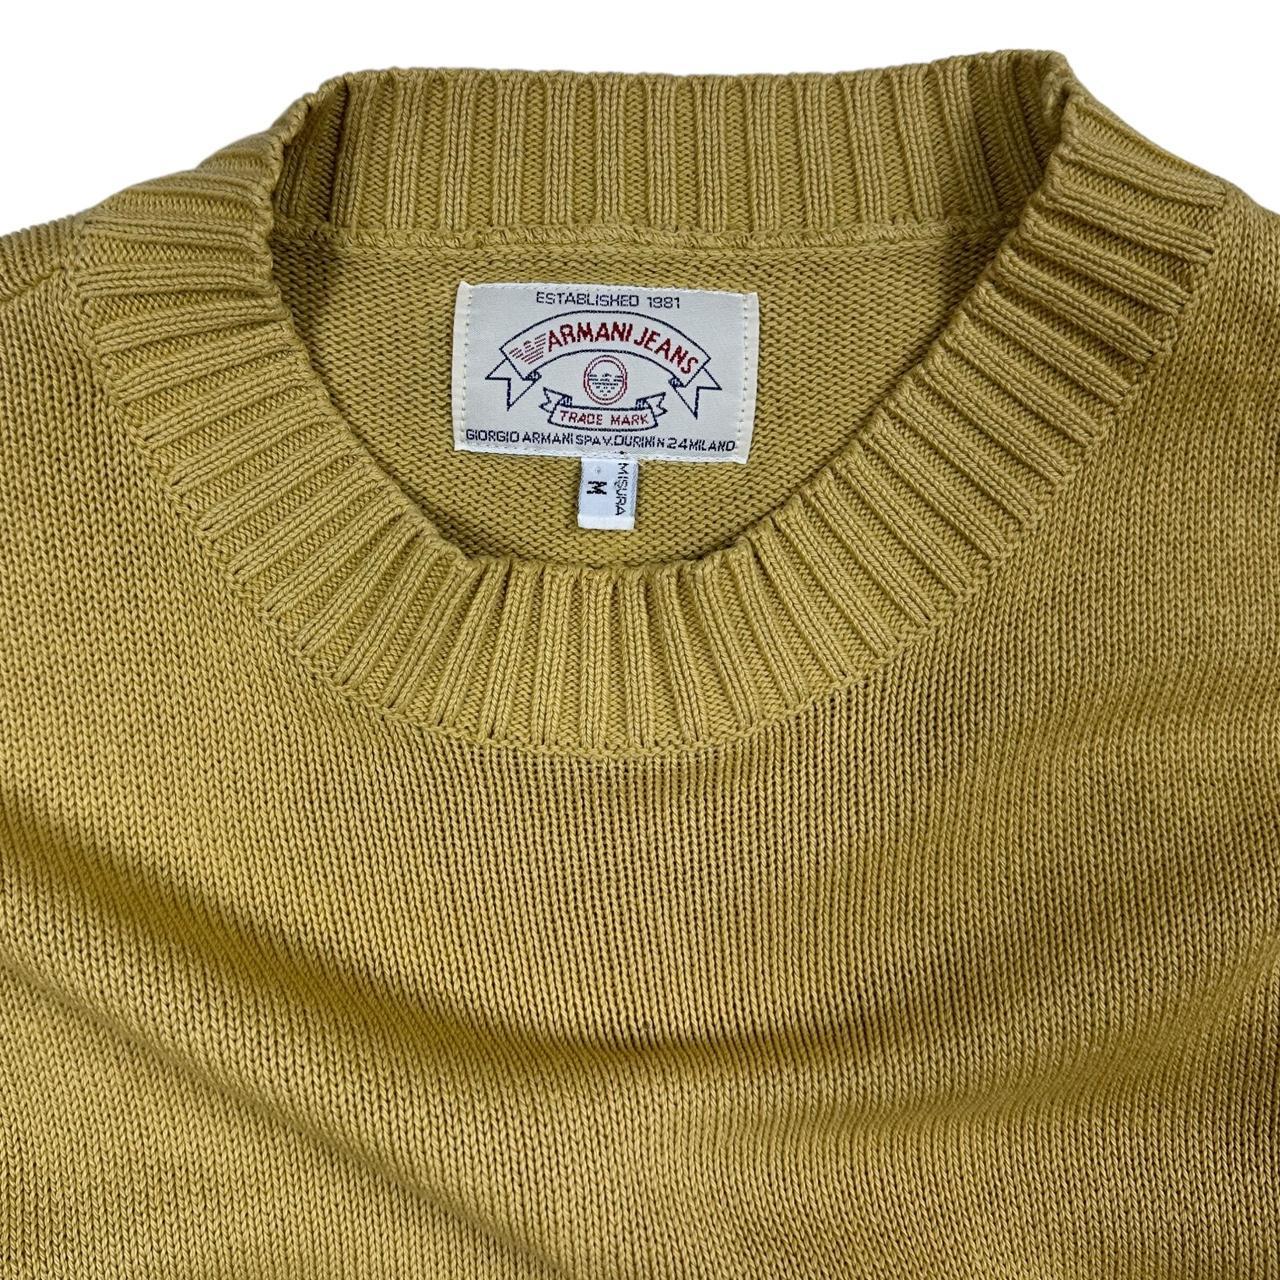 Vintage 1990s Armani Jeans Yellow Crewneck Sweatshirt